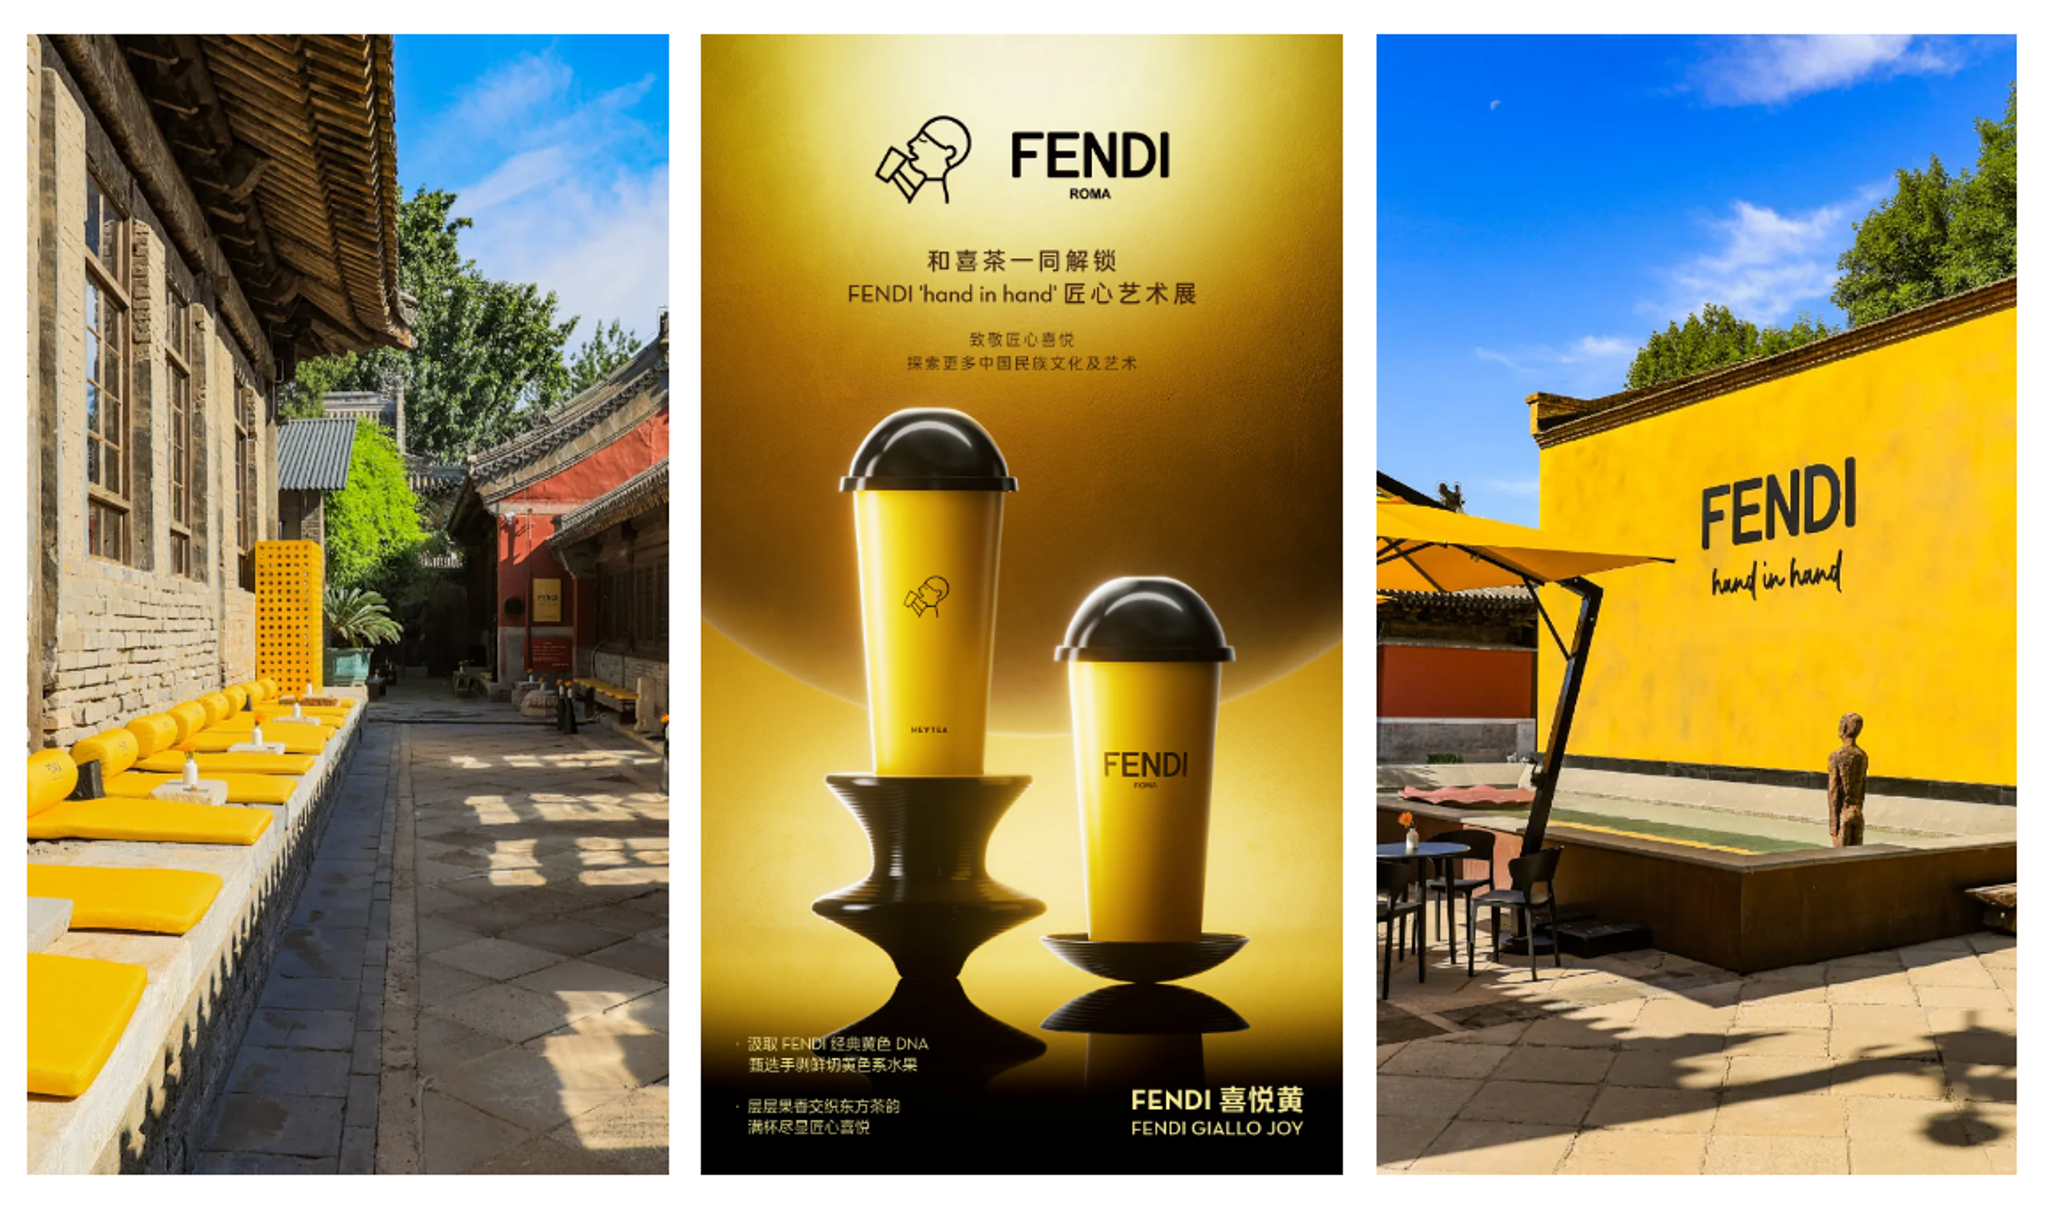 Fendi x Hey Tea offers Chinese HNWIs a mindful art space